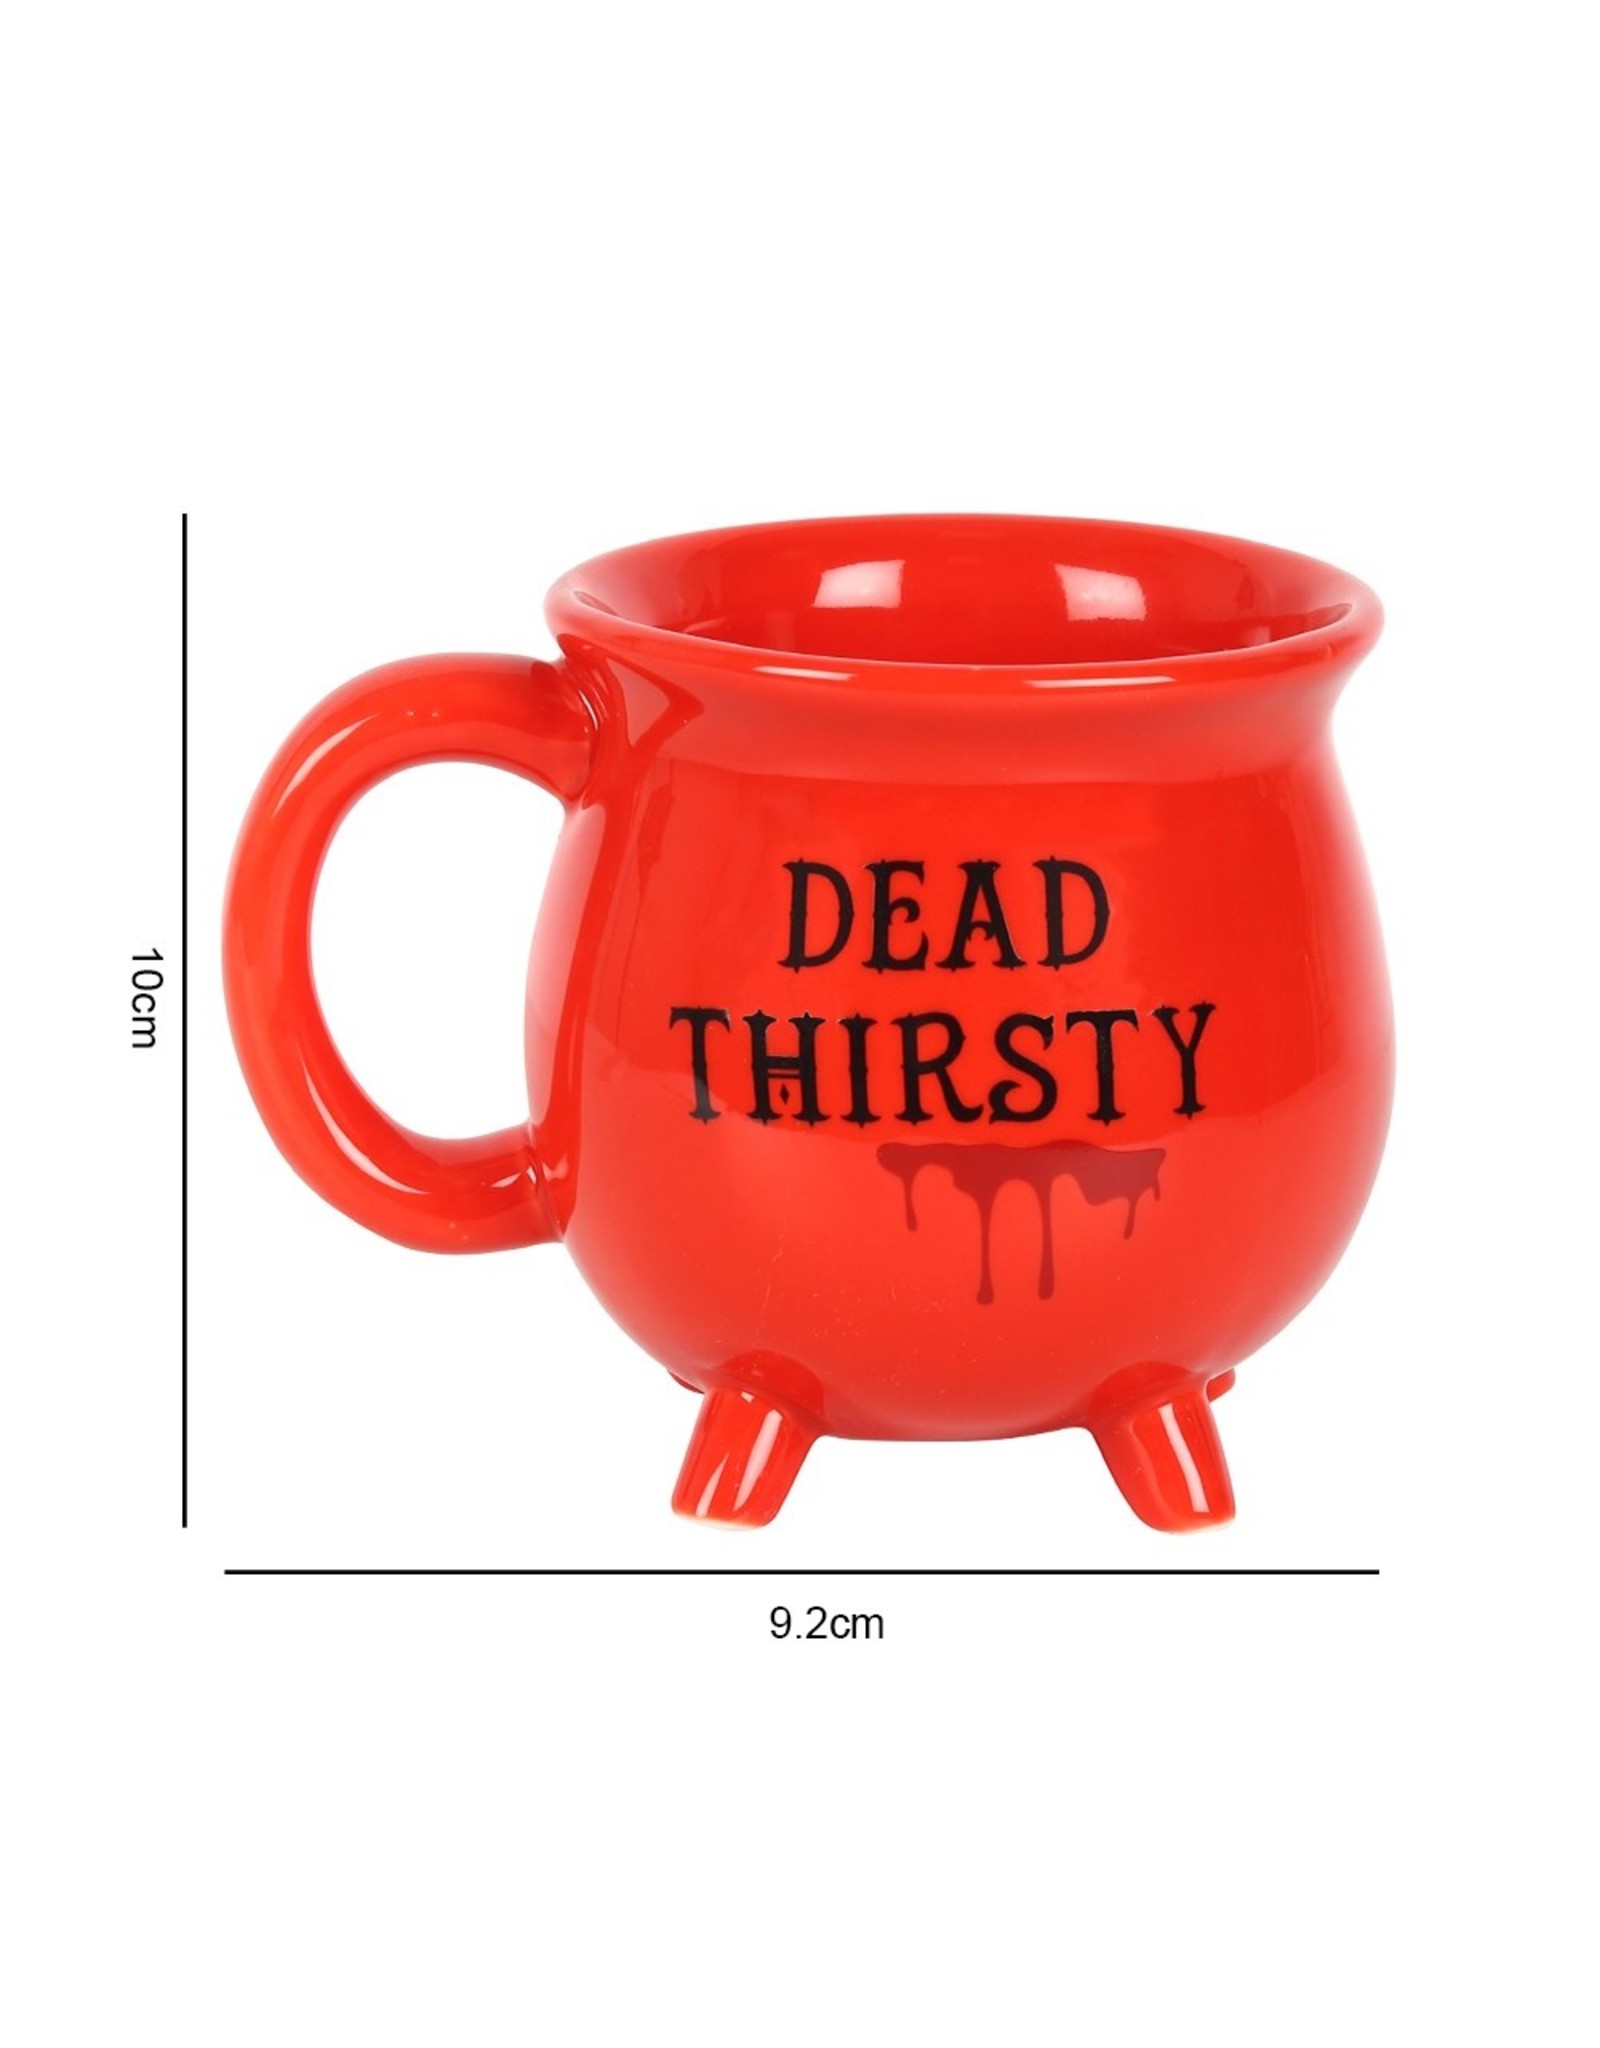 Something Different Giftware & Lifestyle - Dead Thirsty Cauldron mug